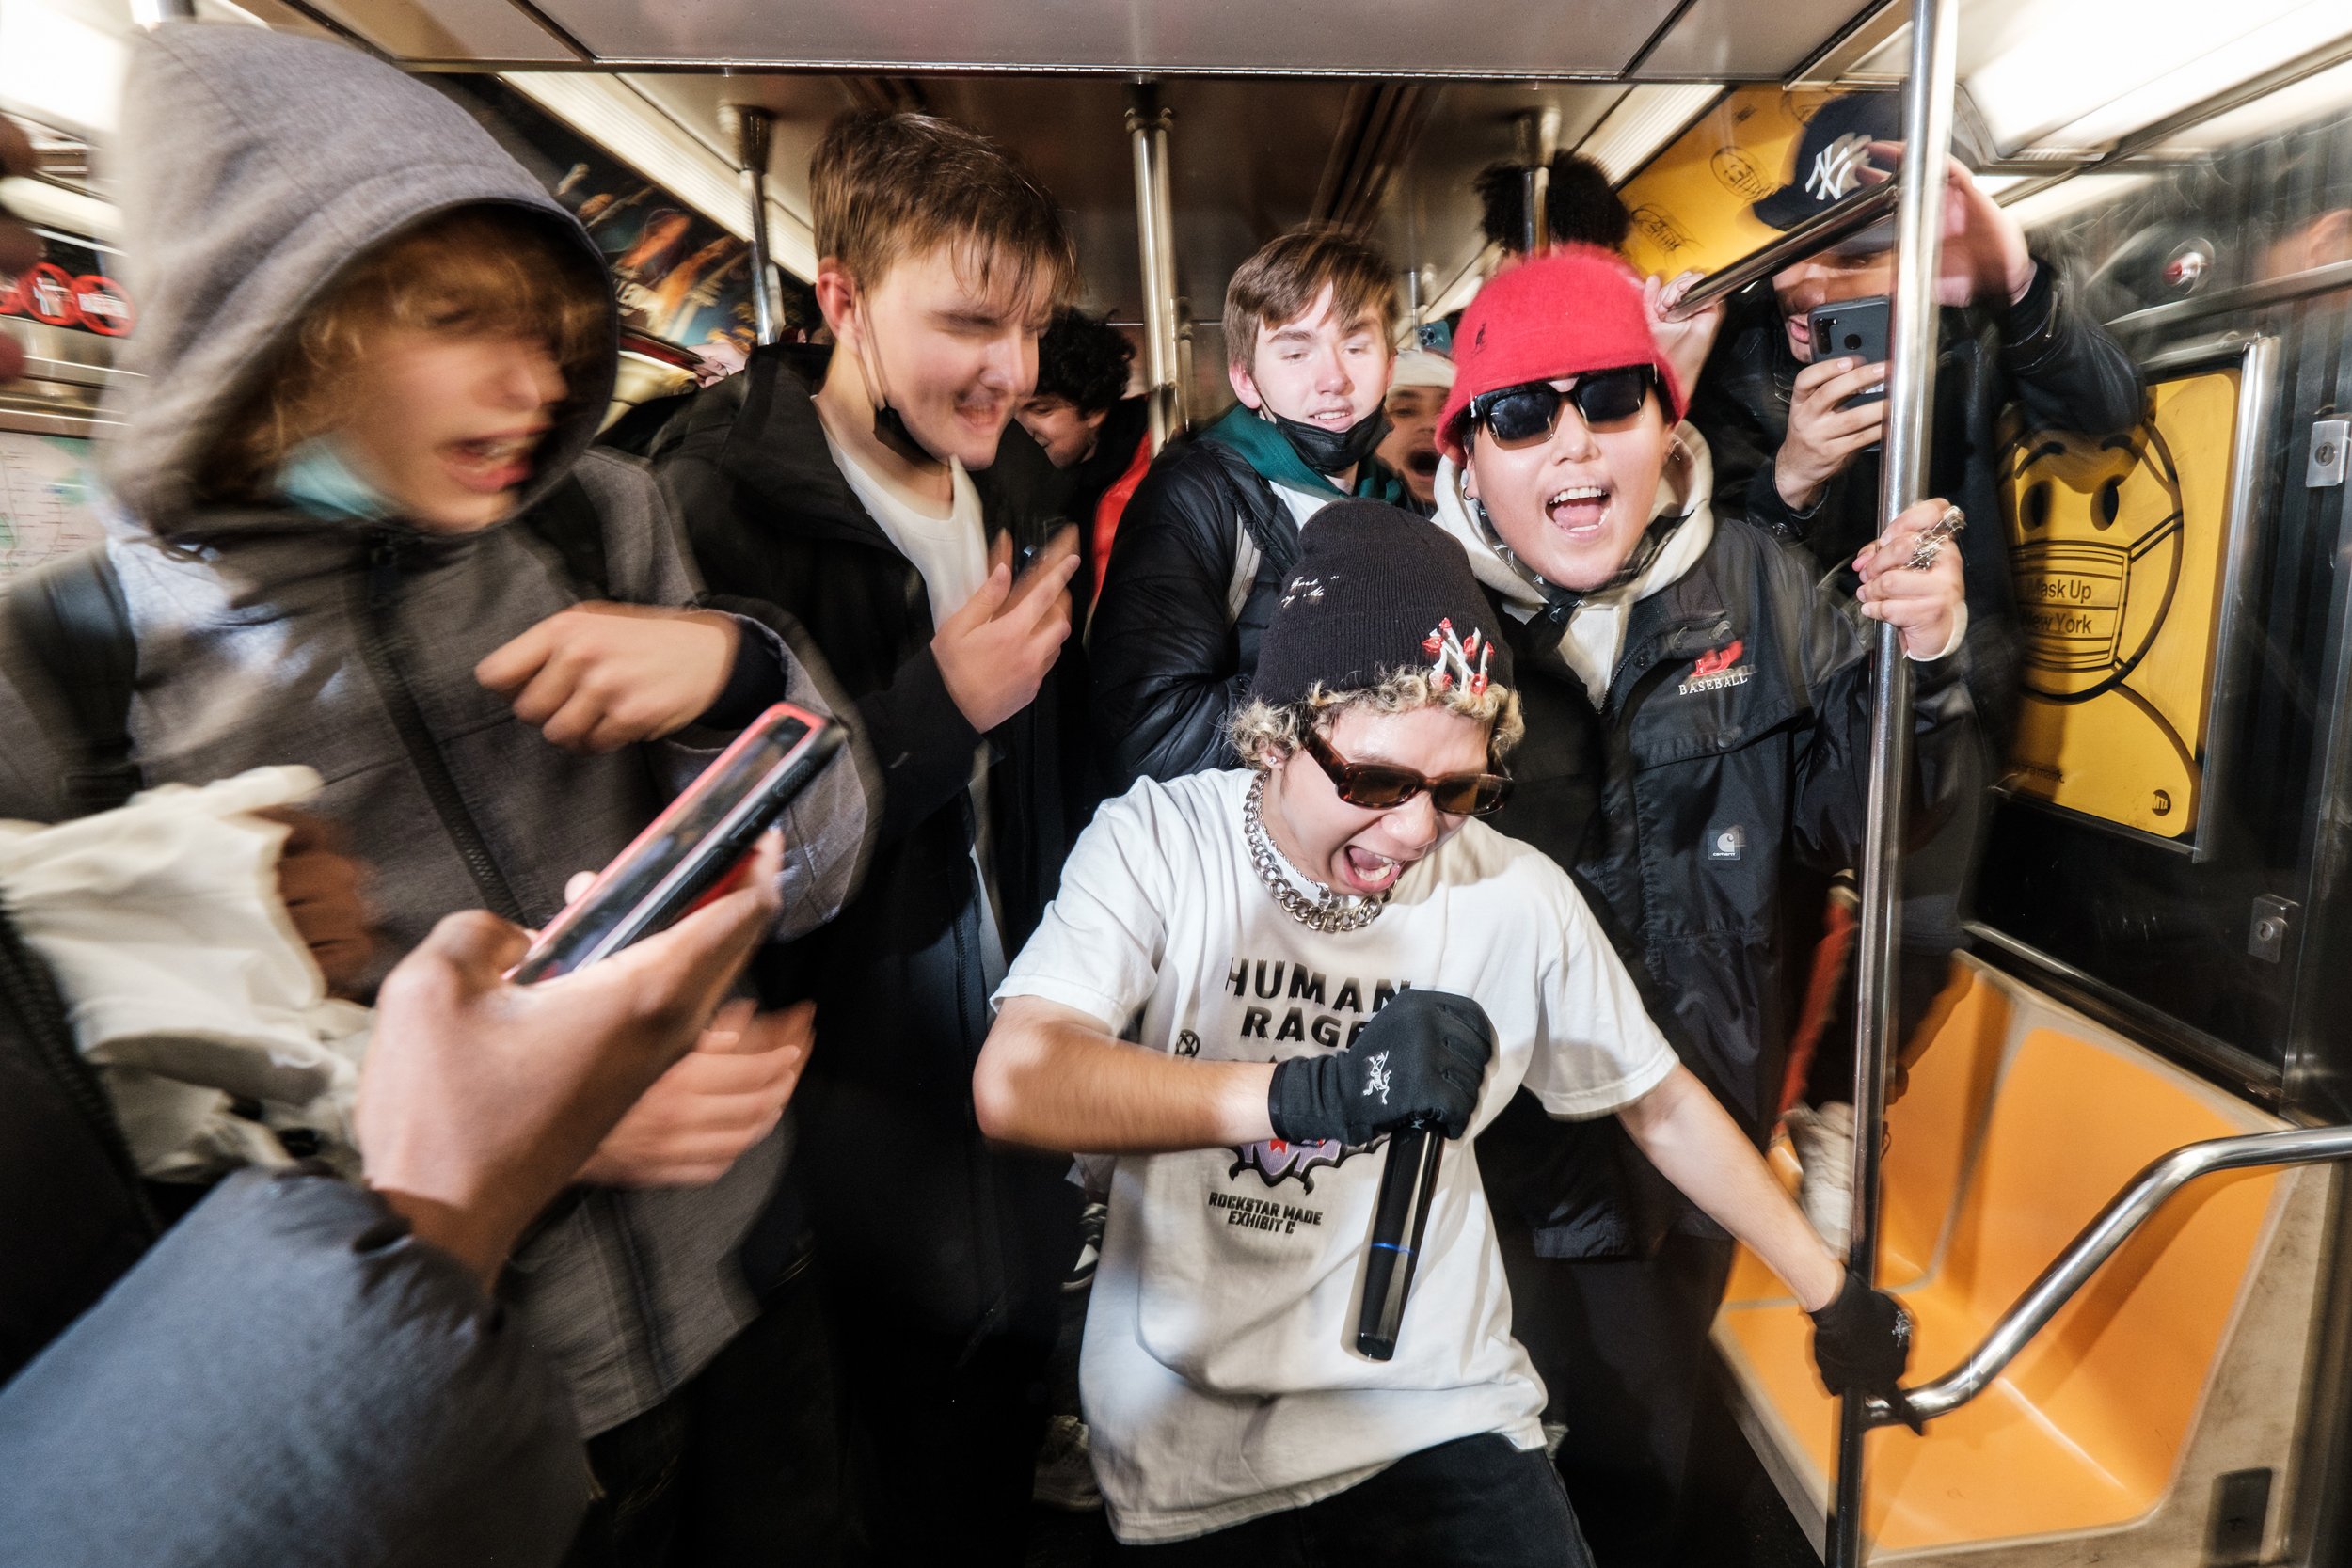  Tik Tok star @scionsays performs in a subway flashmob in NYC 